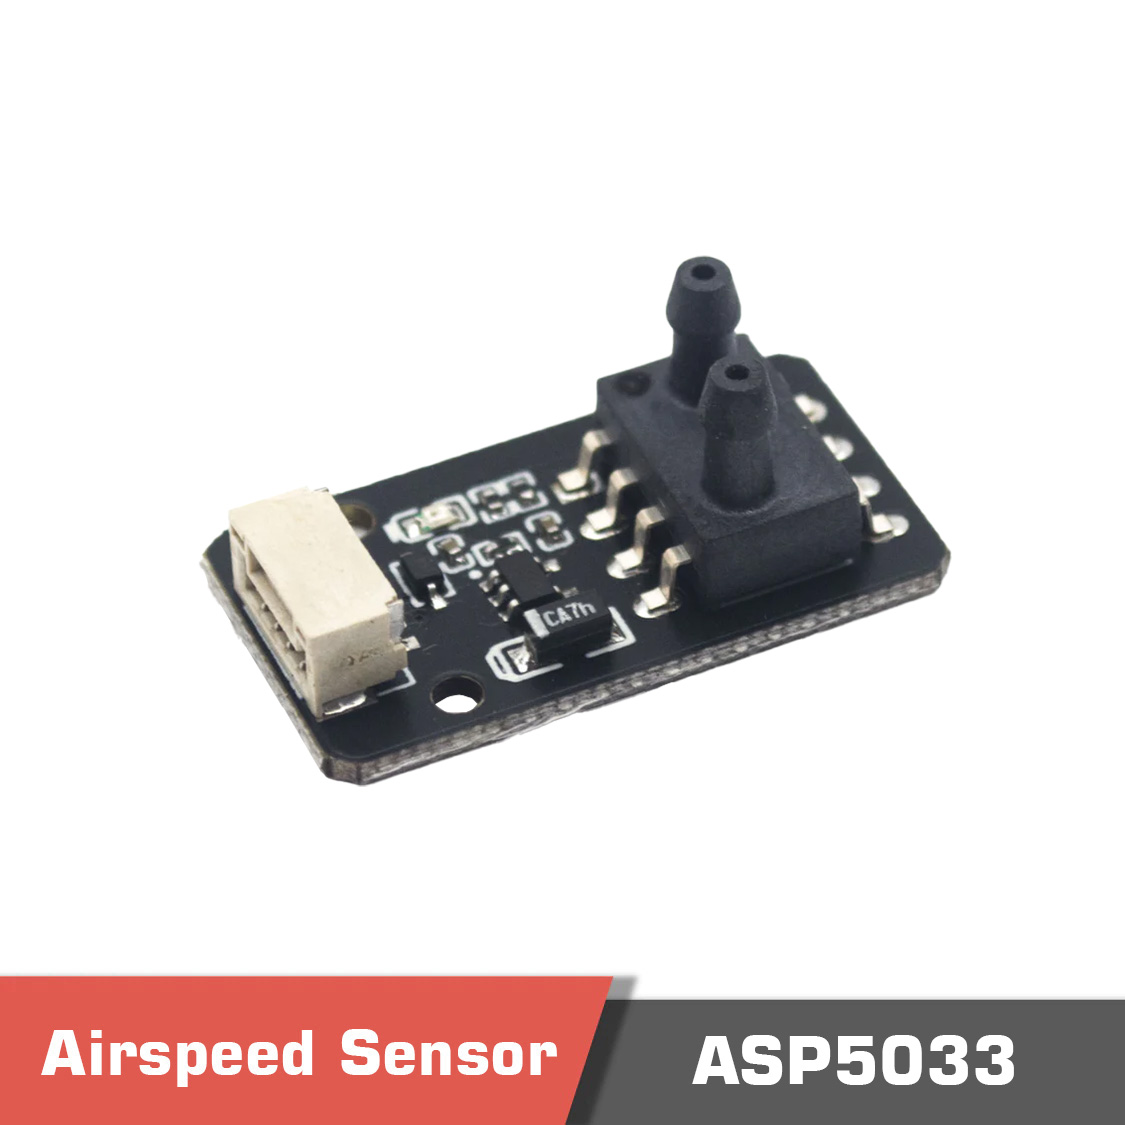 ASP5033.temp1 - X6 P-BOX,X6 P-BOX GNSS Series,GNSS,GPS,pixhawk gps,GNSS tracking module,UAV navigation system,P-Box features,UART and USB interface communication,Dual antenna GNSS module - MotioNew - 1